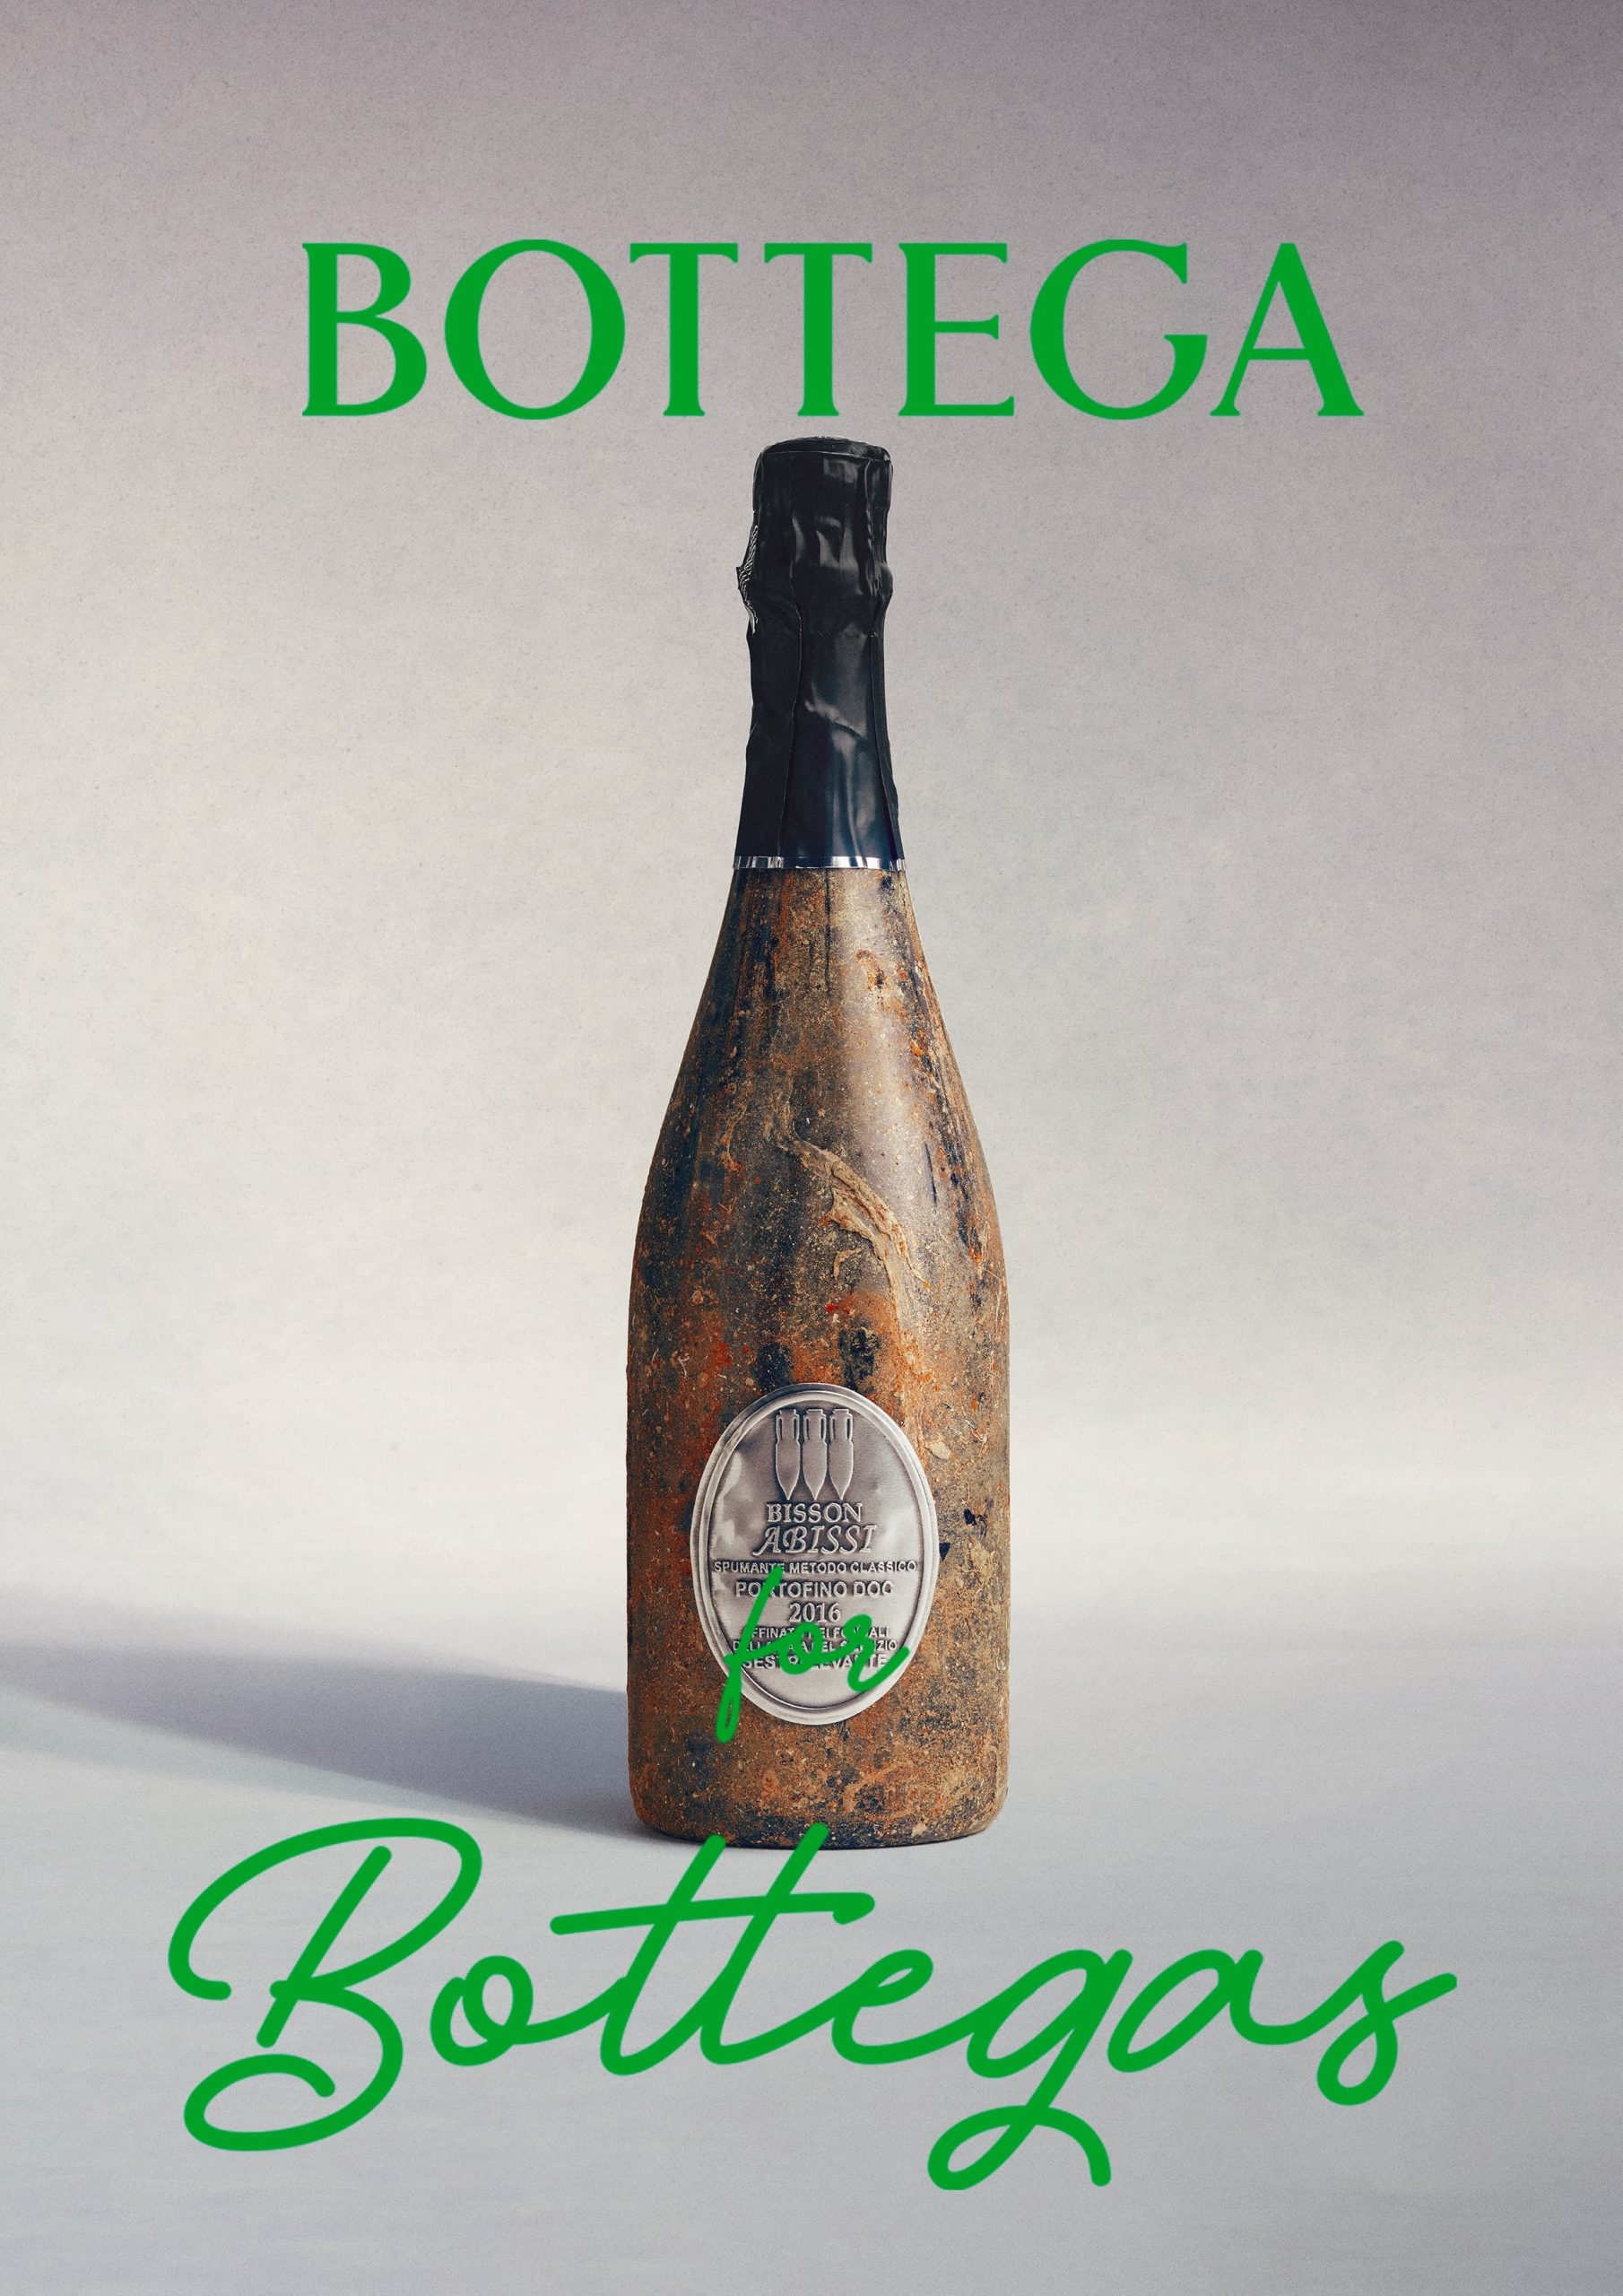 Bottega Veneta Launches “Bottega for Bottegas” Project